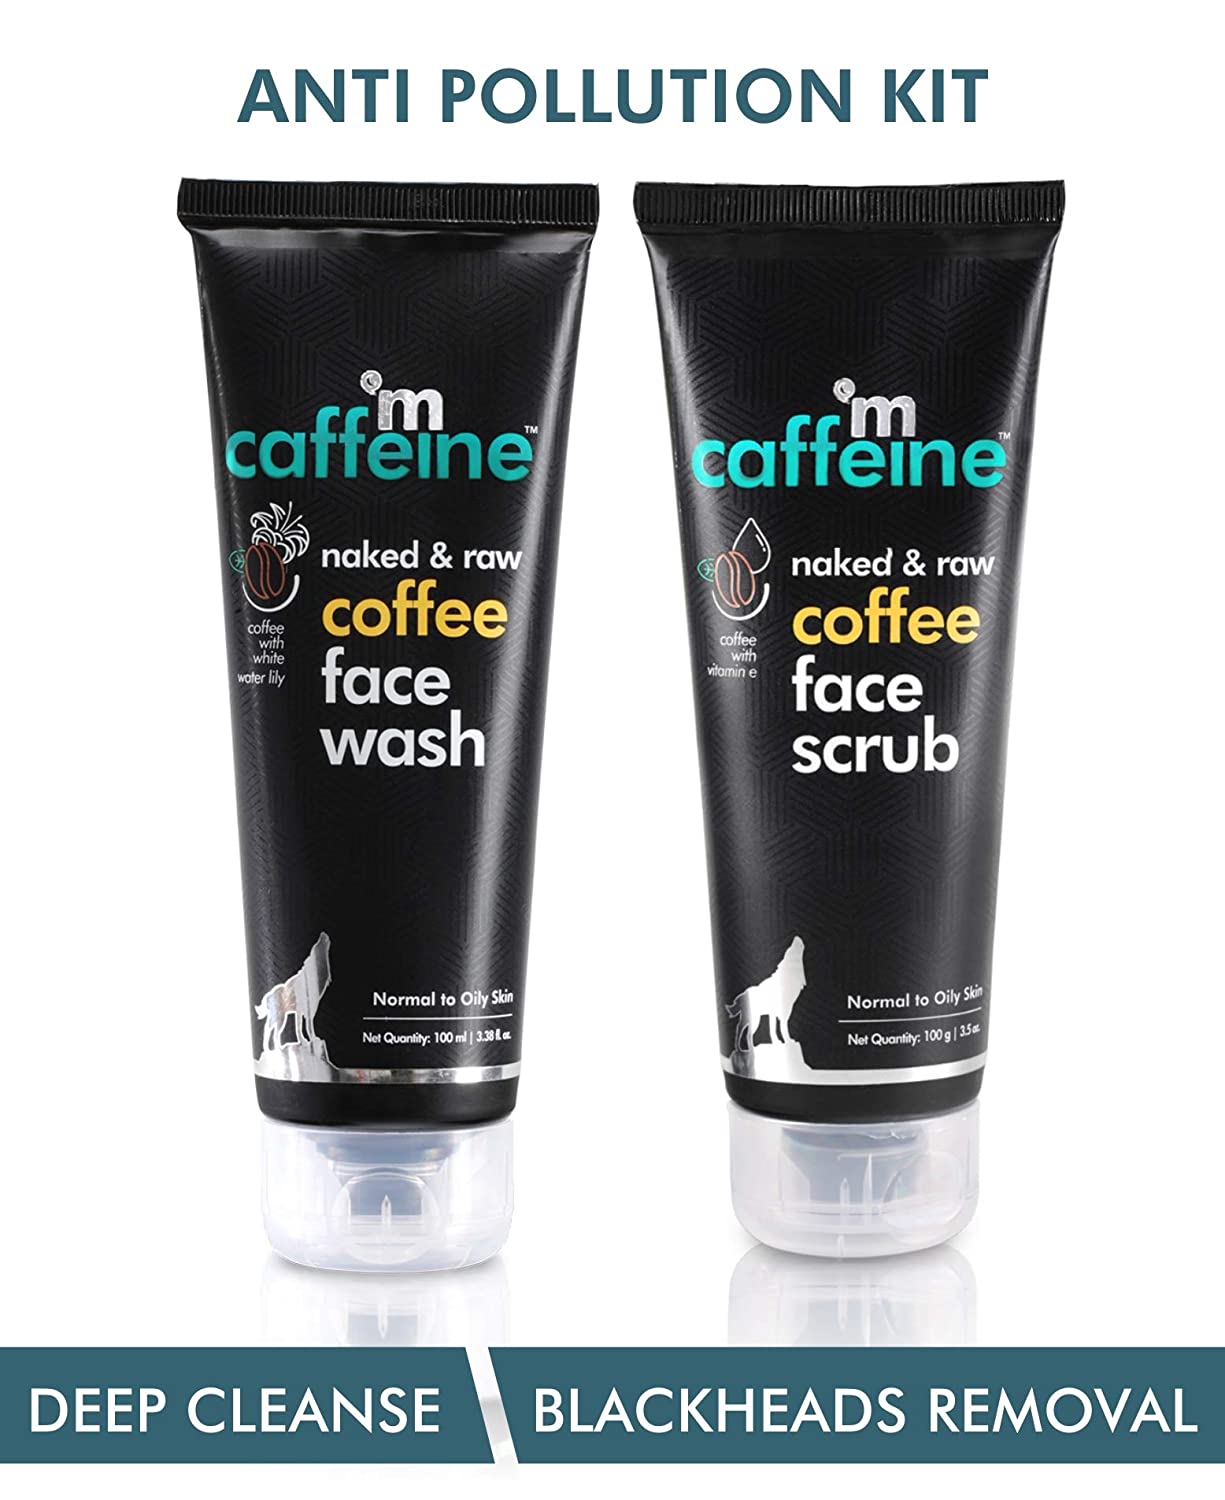 mCaffeine Coffee Anti Pollution Kit | Deep Cleanse, Blackheads Removal ...